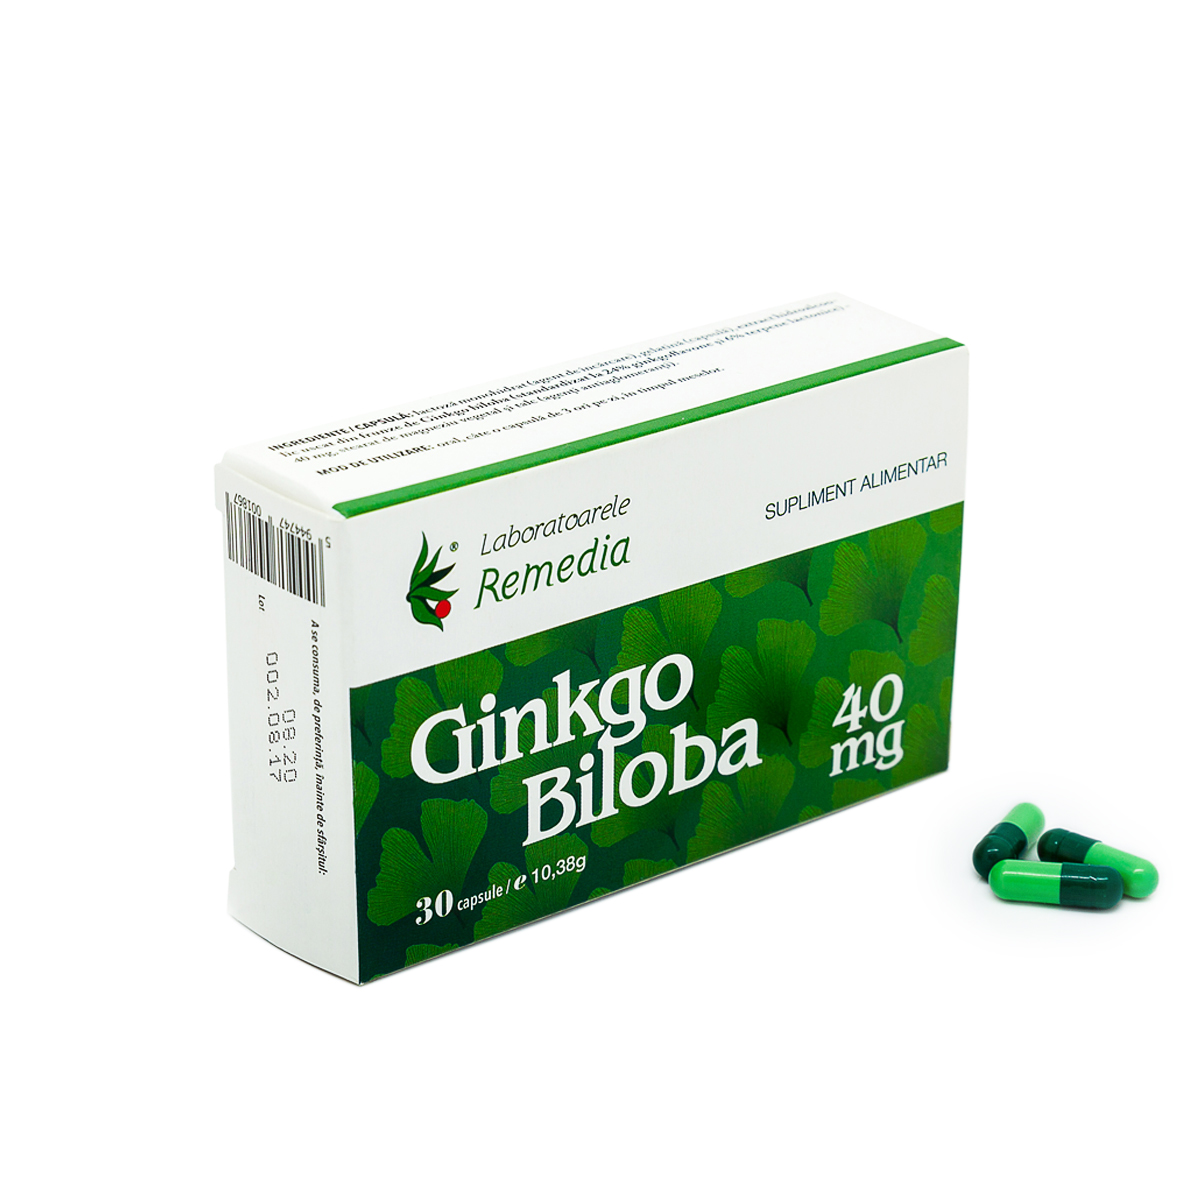 Ginkgo Biloba 40 mg, 30 capsule, Remedia